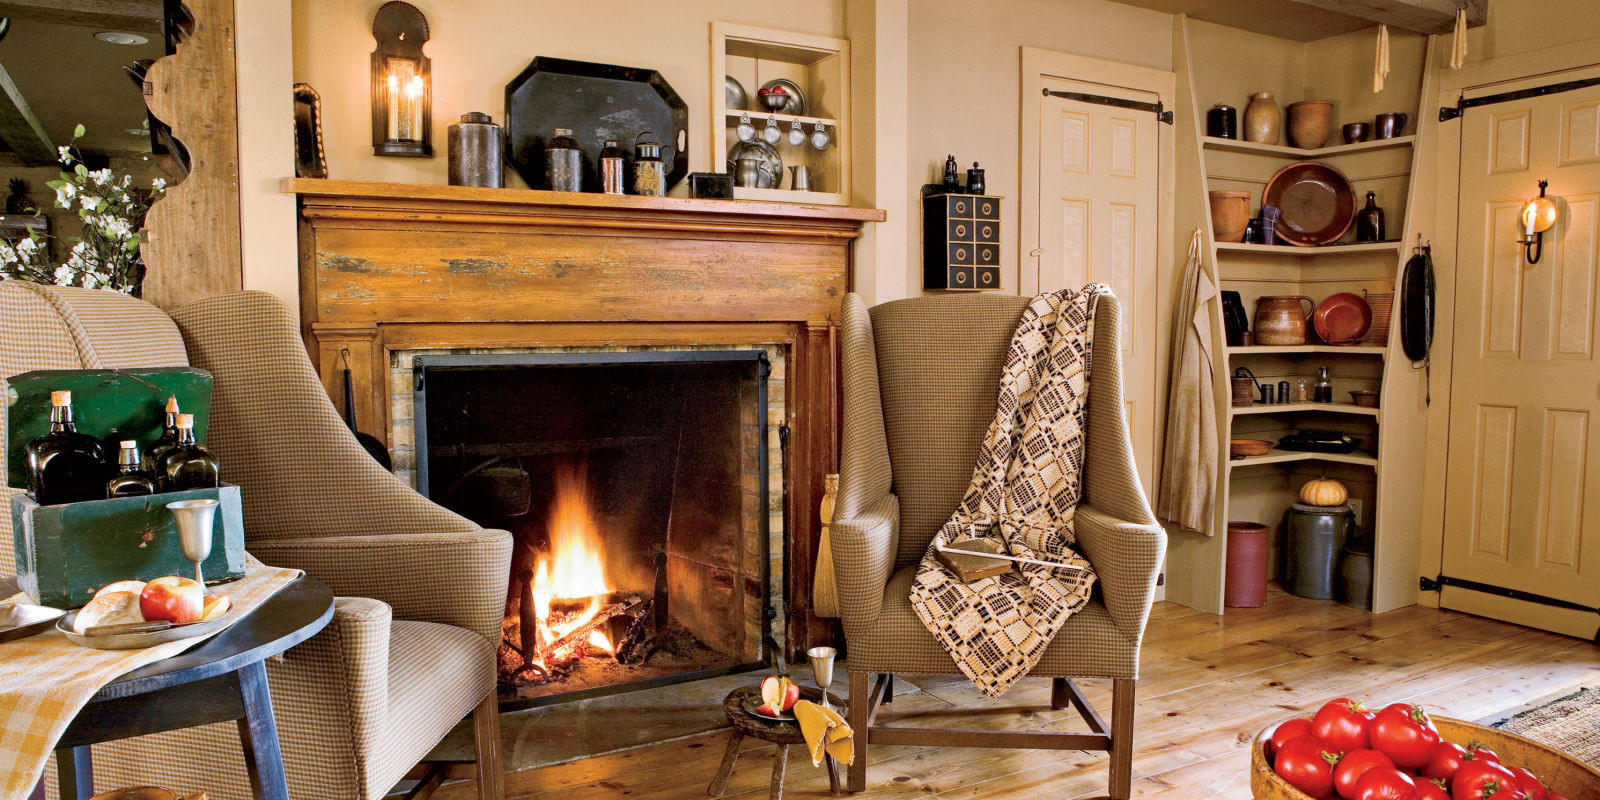 Best ideas about Fireplace Design Ideas
. Save or Pin 40 Fireplace Design Ideas Fireplace Mantel Decorating Ideas Now.